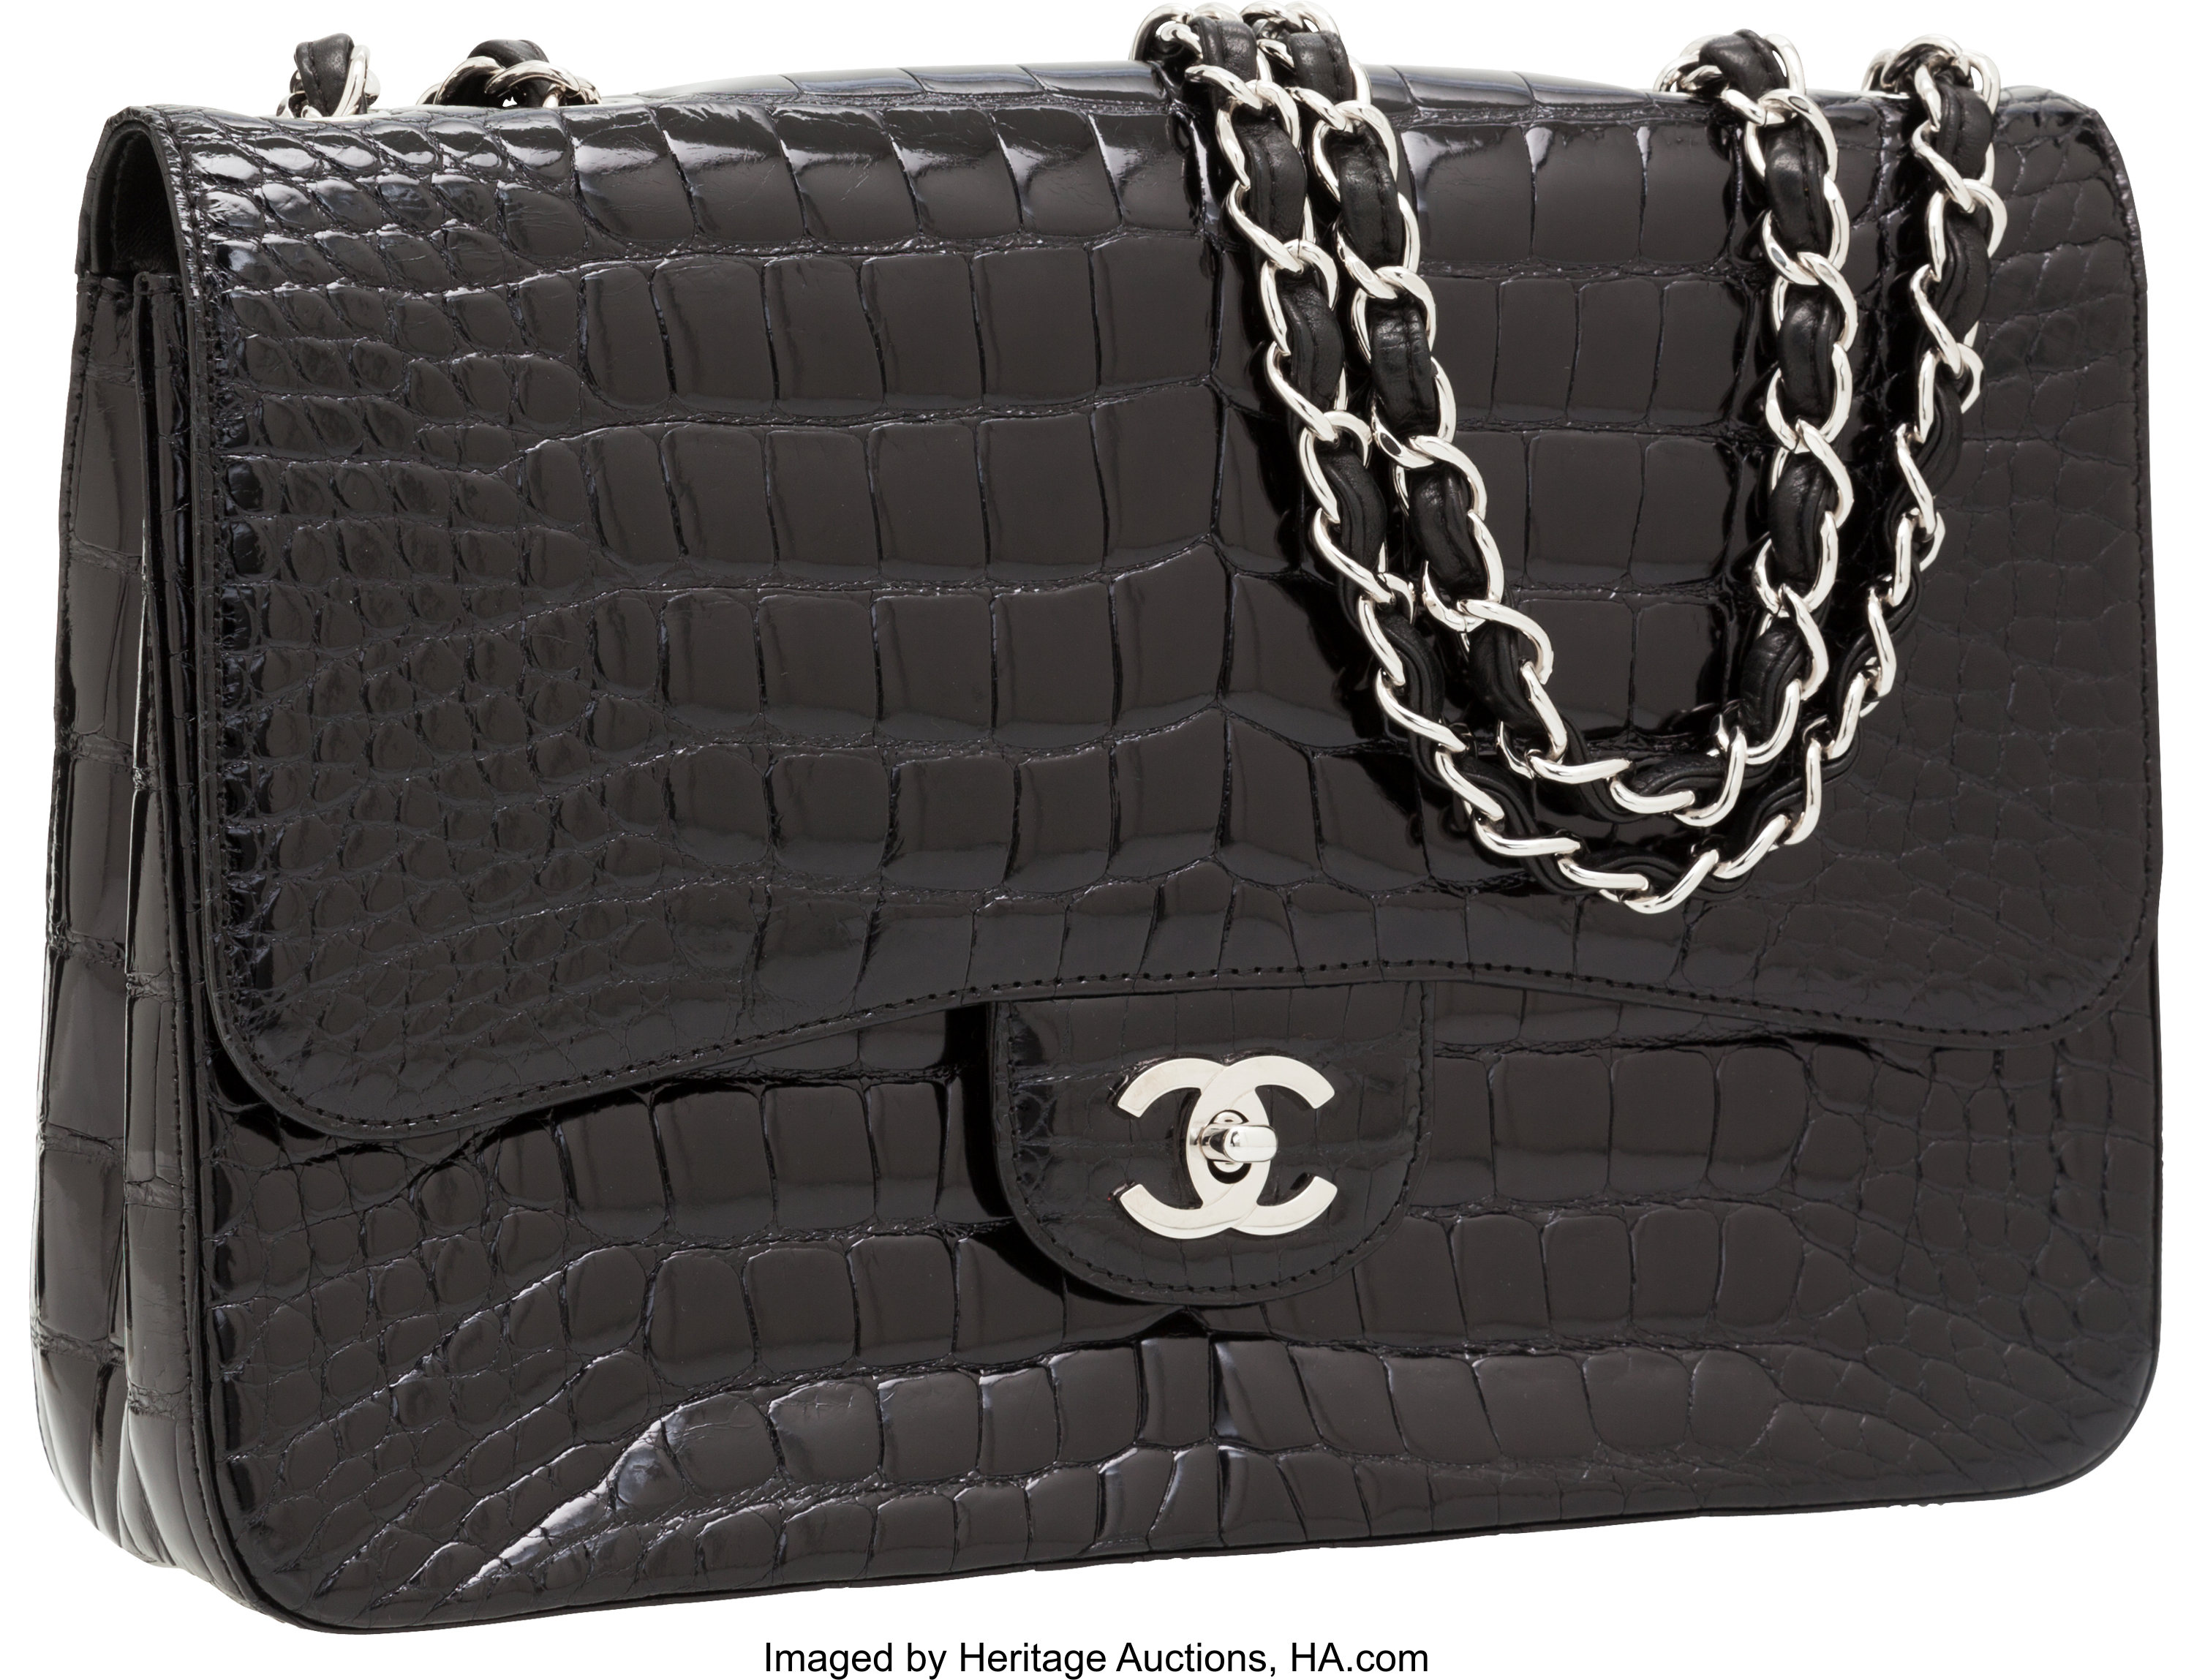 Chanel Shiny Black Crocodile Jumbo Single Flap Bag with Silver